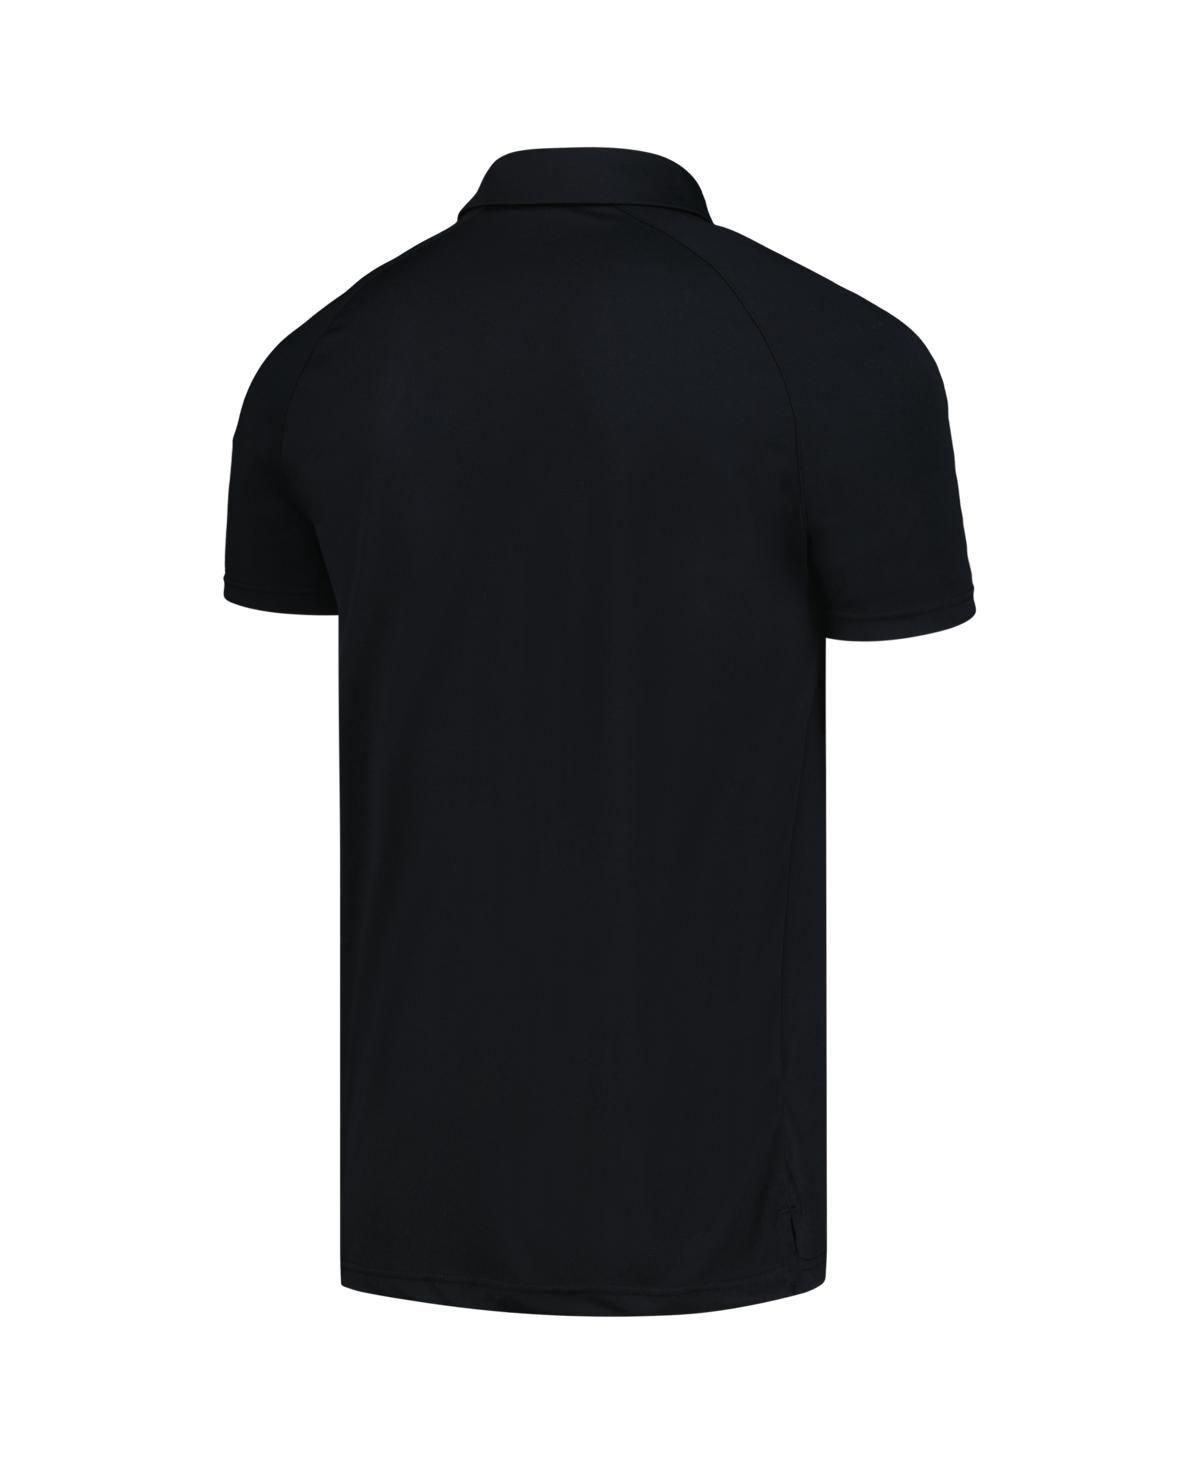 Shop Levelwear Men's  Black San Francisco Giants Sector Batter Up Raglan Polo Shirt